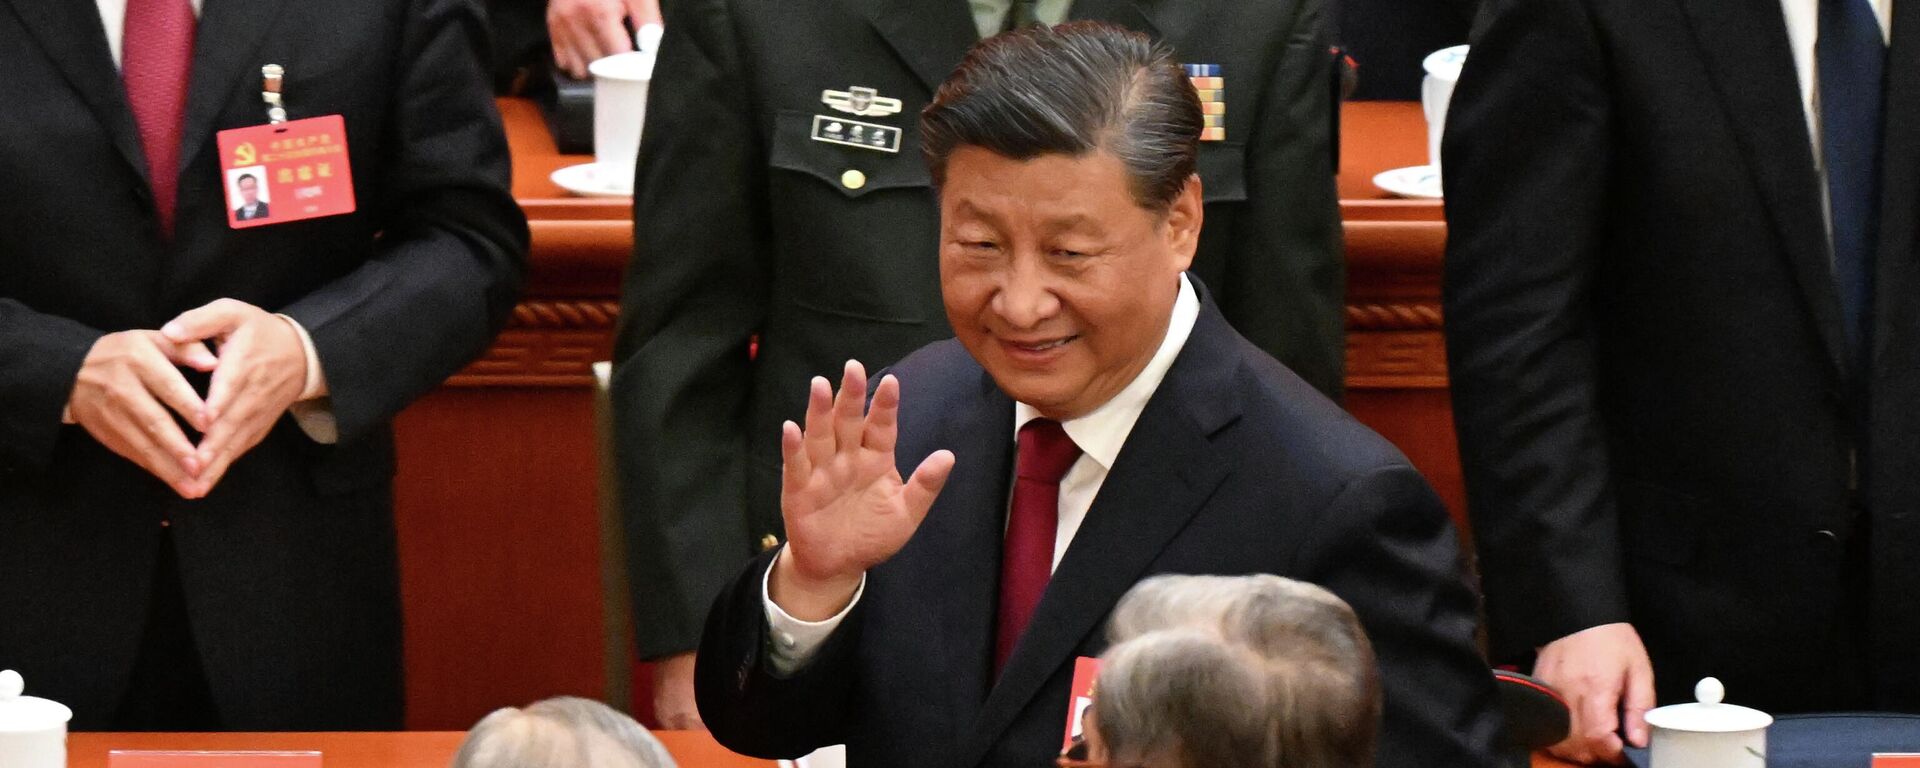 Kineski predsednik Si Đinping pozdravlja učesnike 20. kongresa Komunističke partije Kine (KPK). - Sputnik Srbija, 1920, 23.10.2022